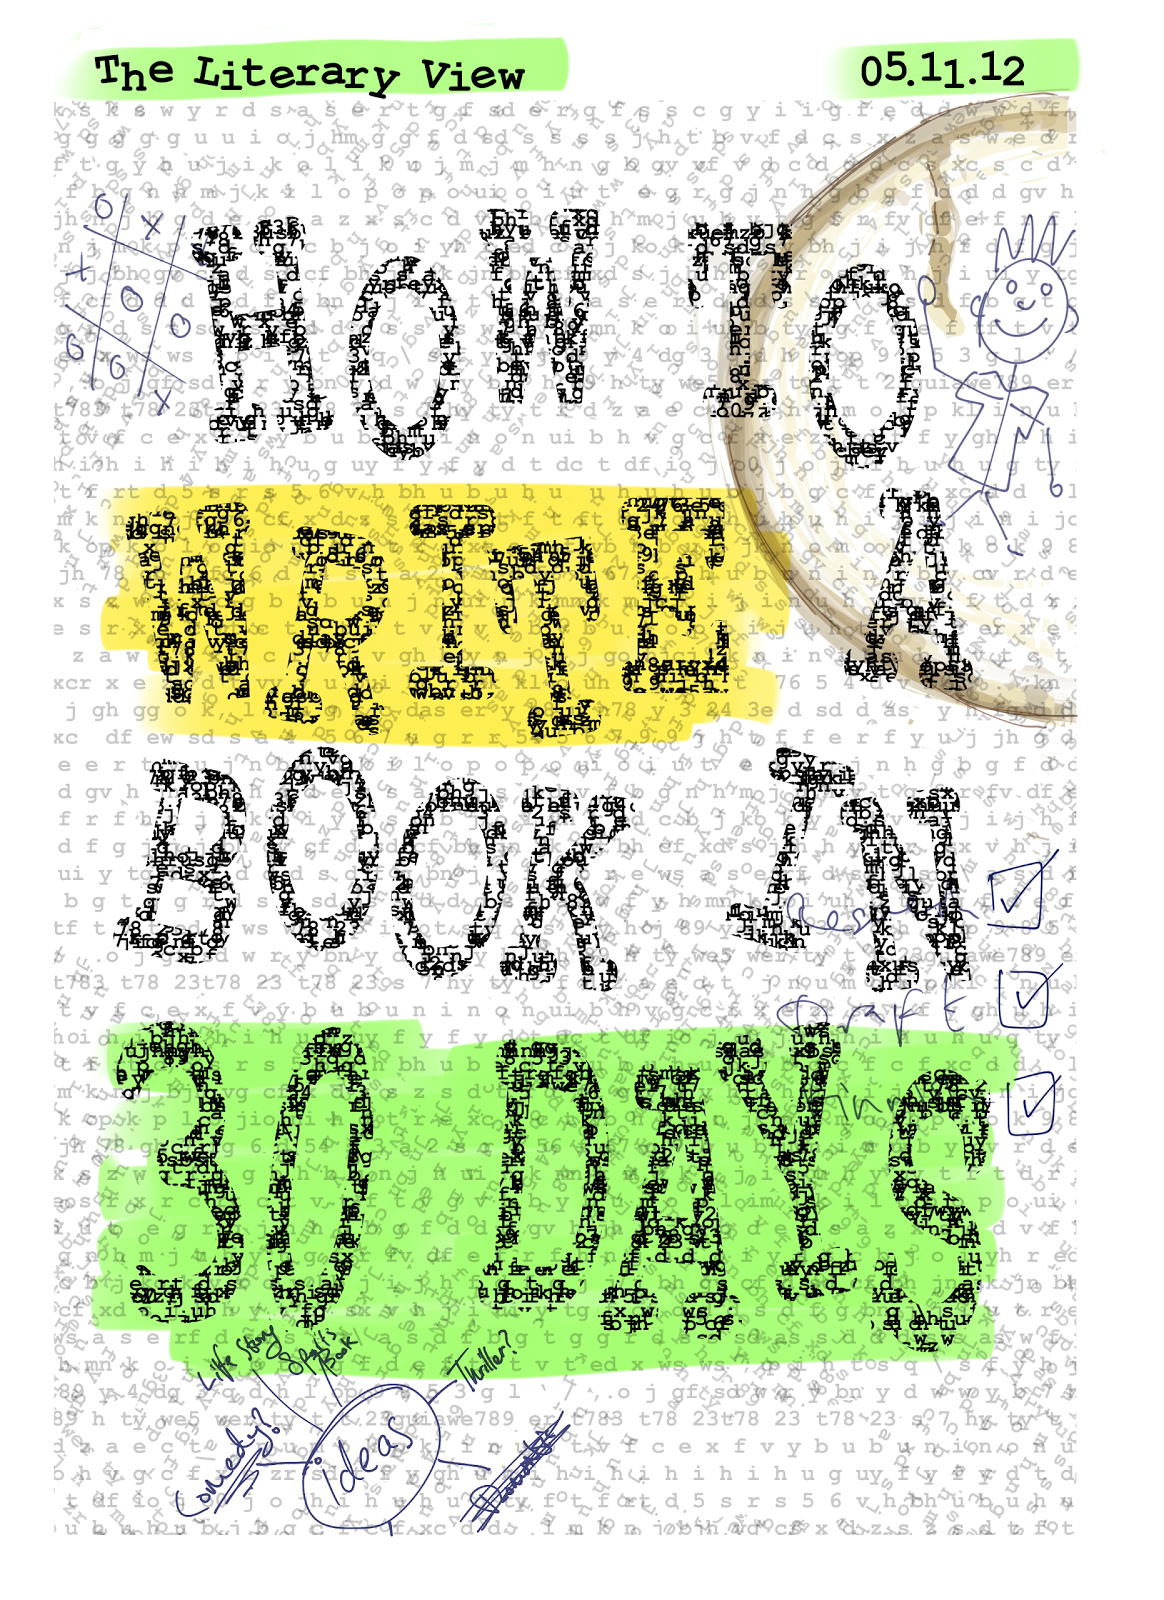 Stuart Herrington Illustration How To Write A Book In 30 Days 2